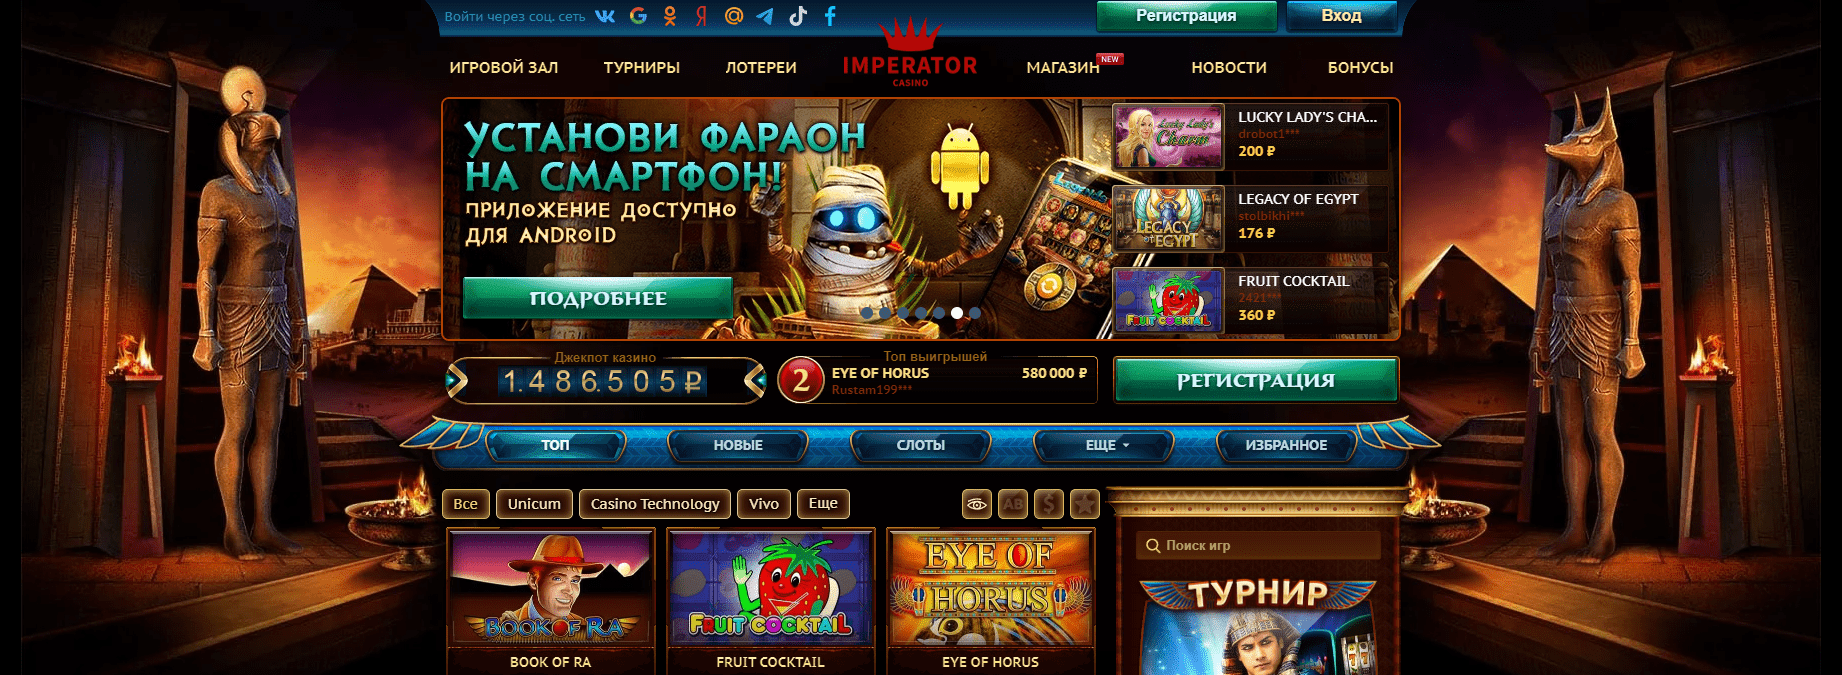 Sitio oficial del casino Imperator